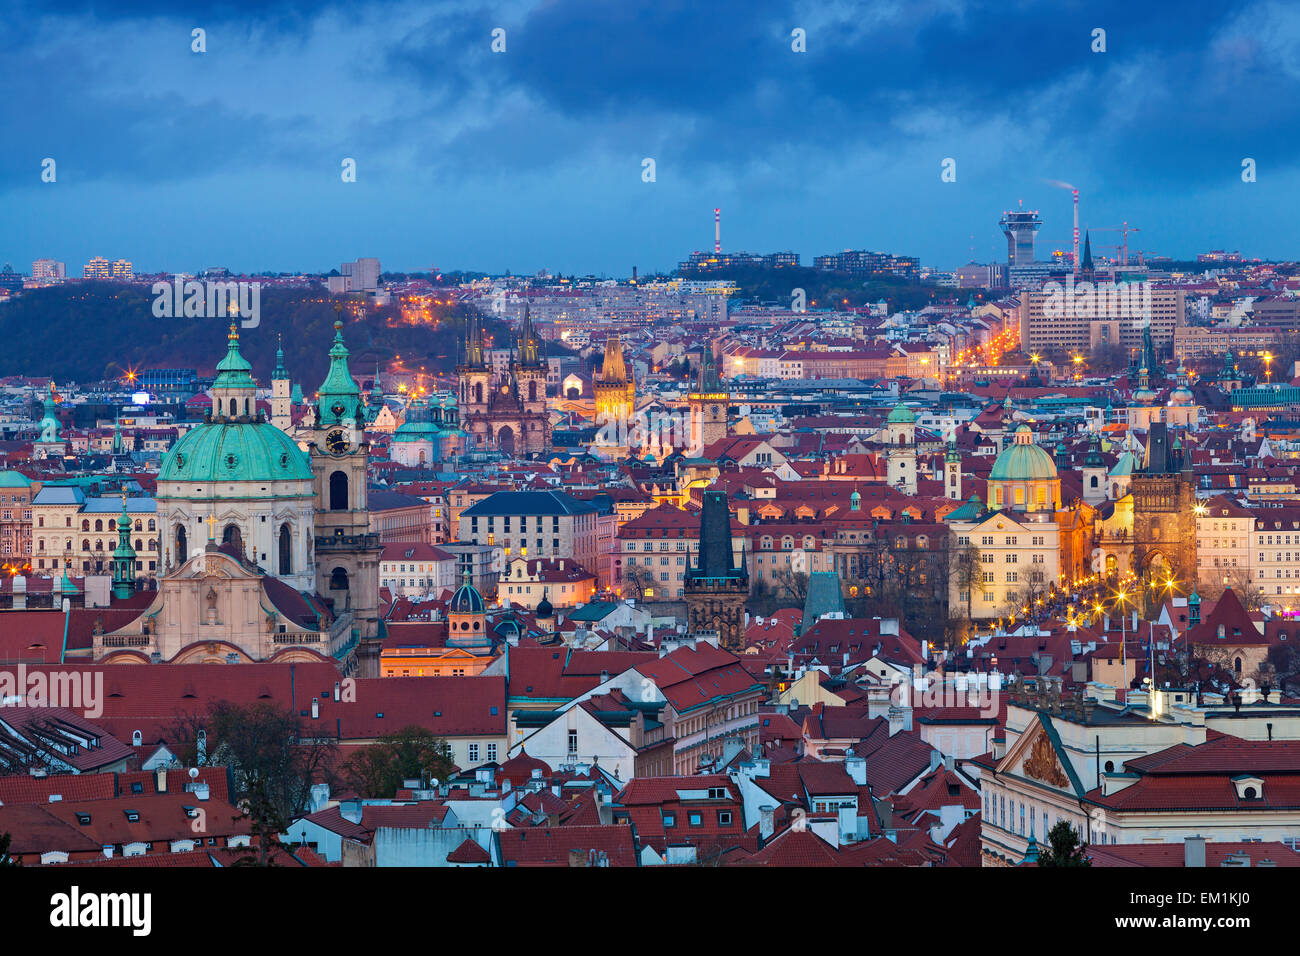 Prague. Image of Prague, capital city of Czech Republic during twilight blue hour. Stock Photo